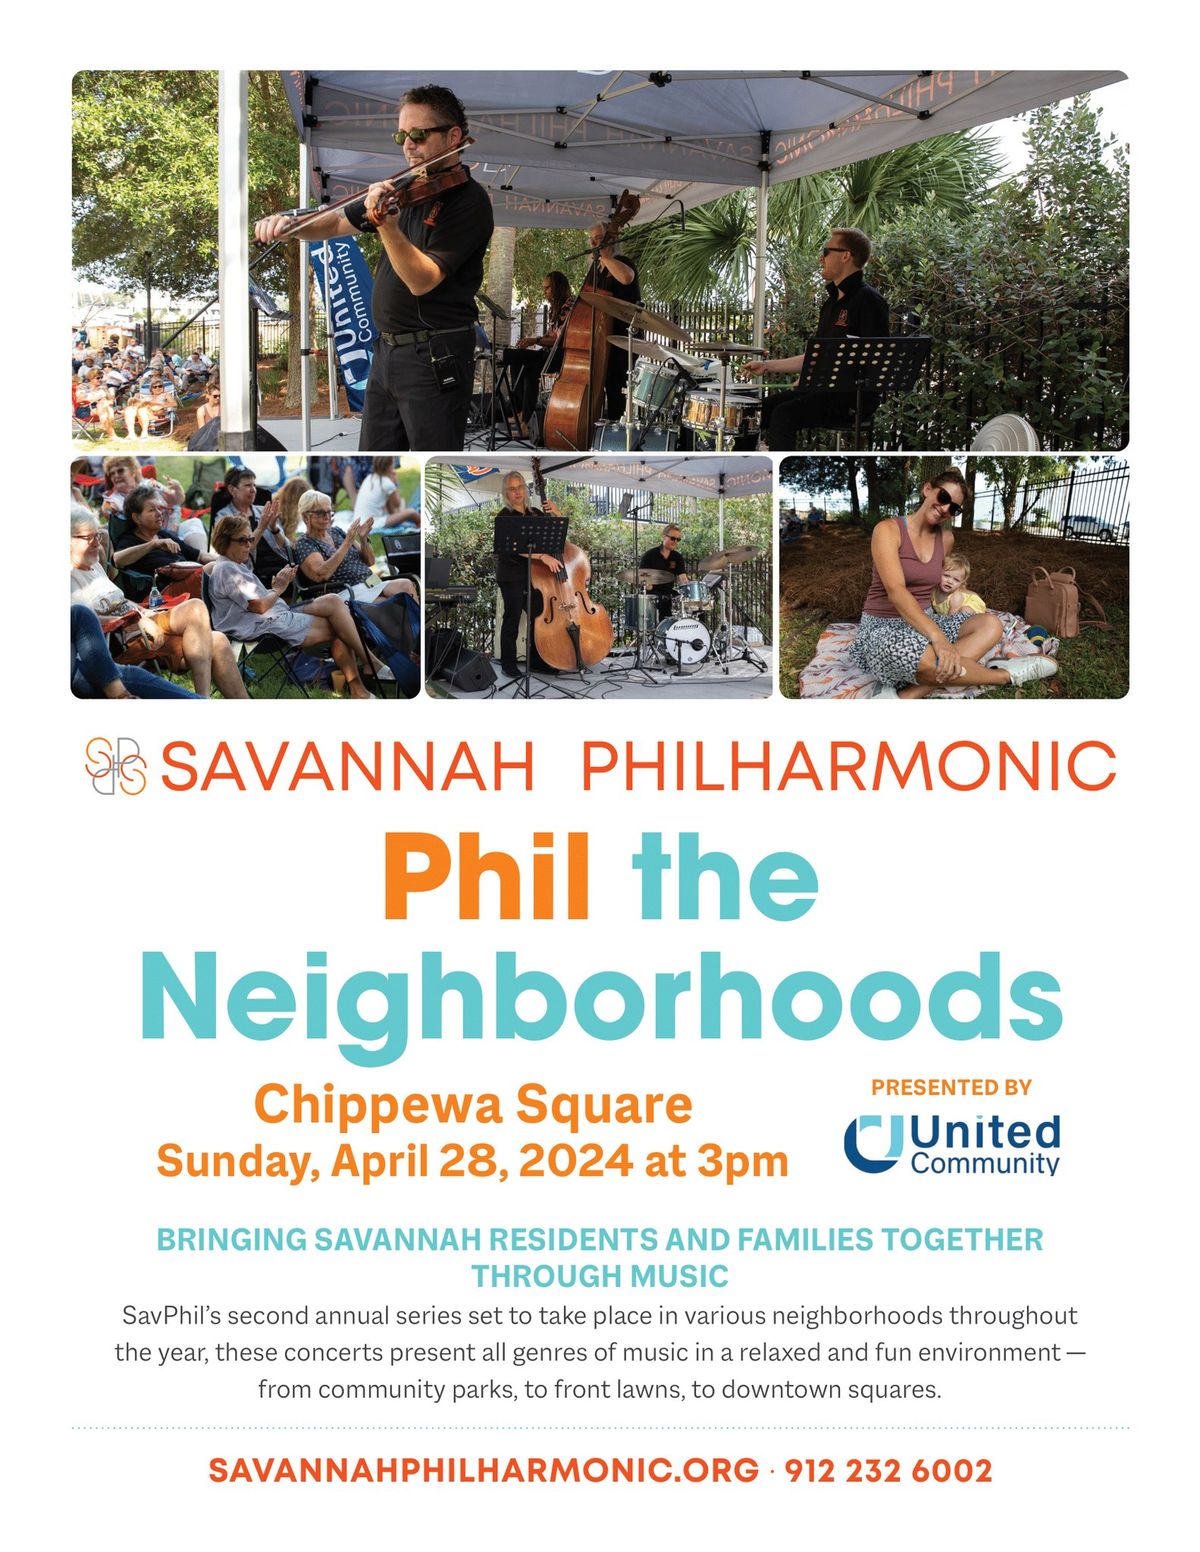 Phil the Neighborhoods: Chippewa Square